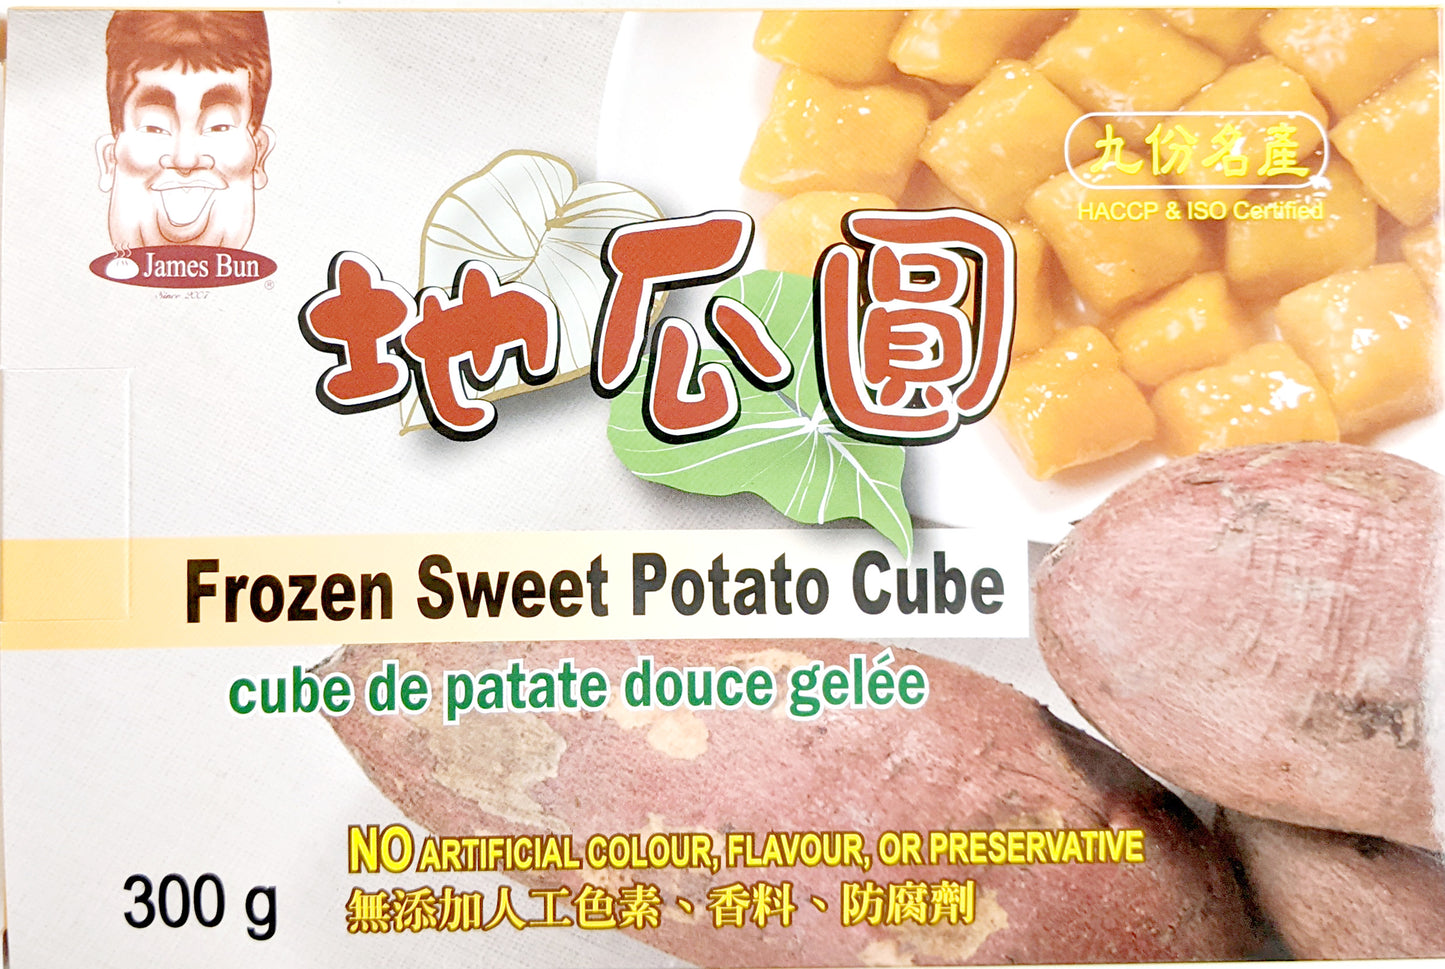 James Bun Frozen Cubed Sweet Potato 地瓜圓